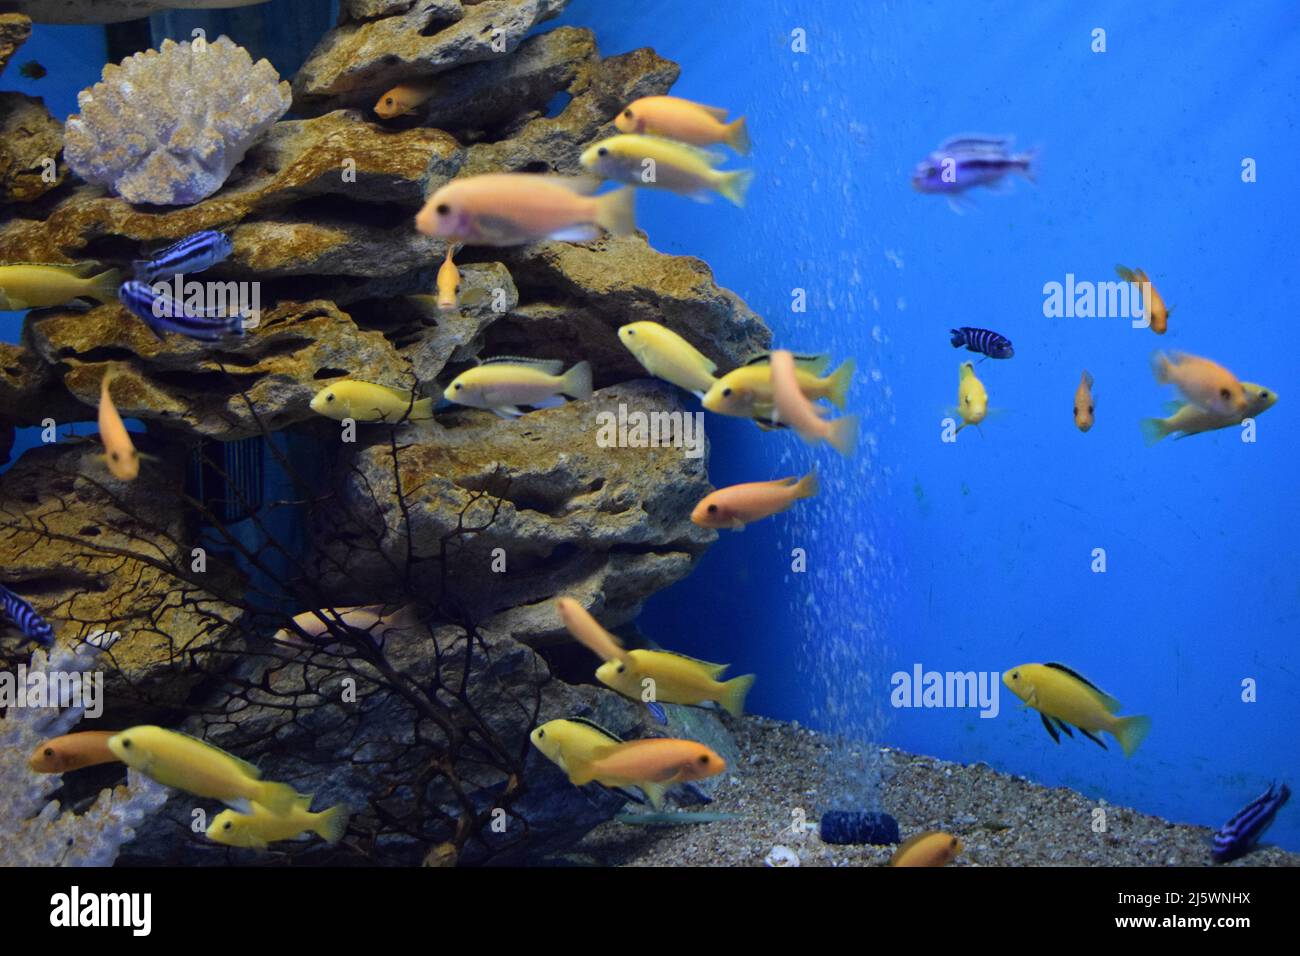 Small bright African fish Labidochromis caeruleus. Stock Photo